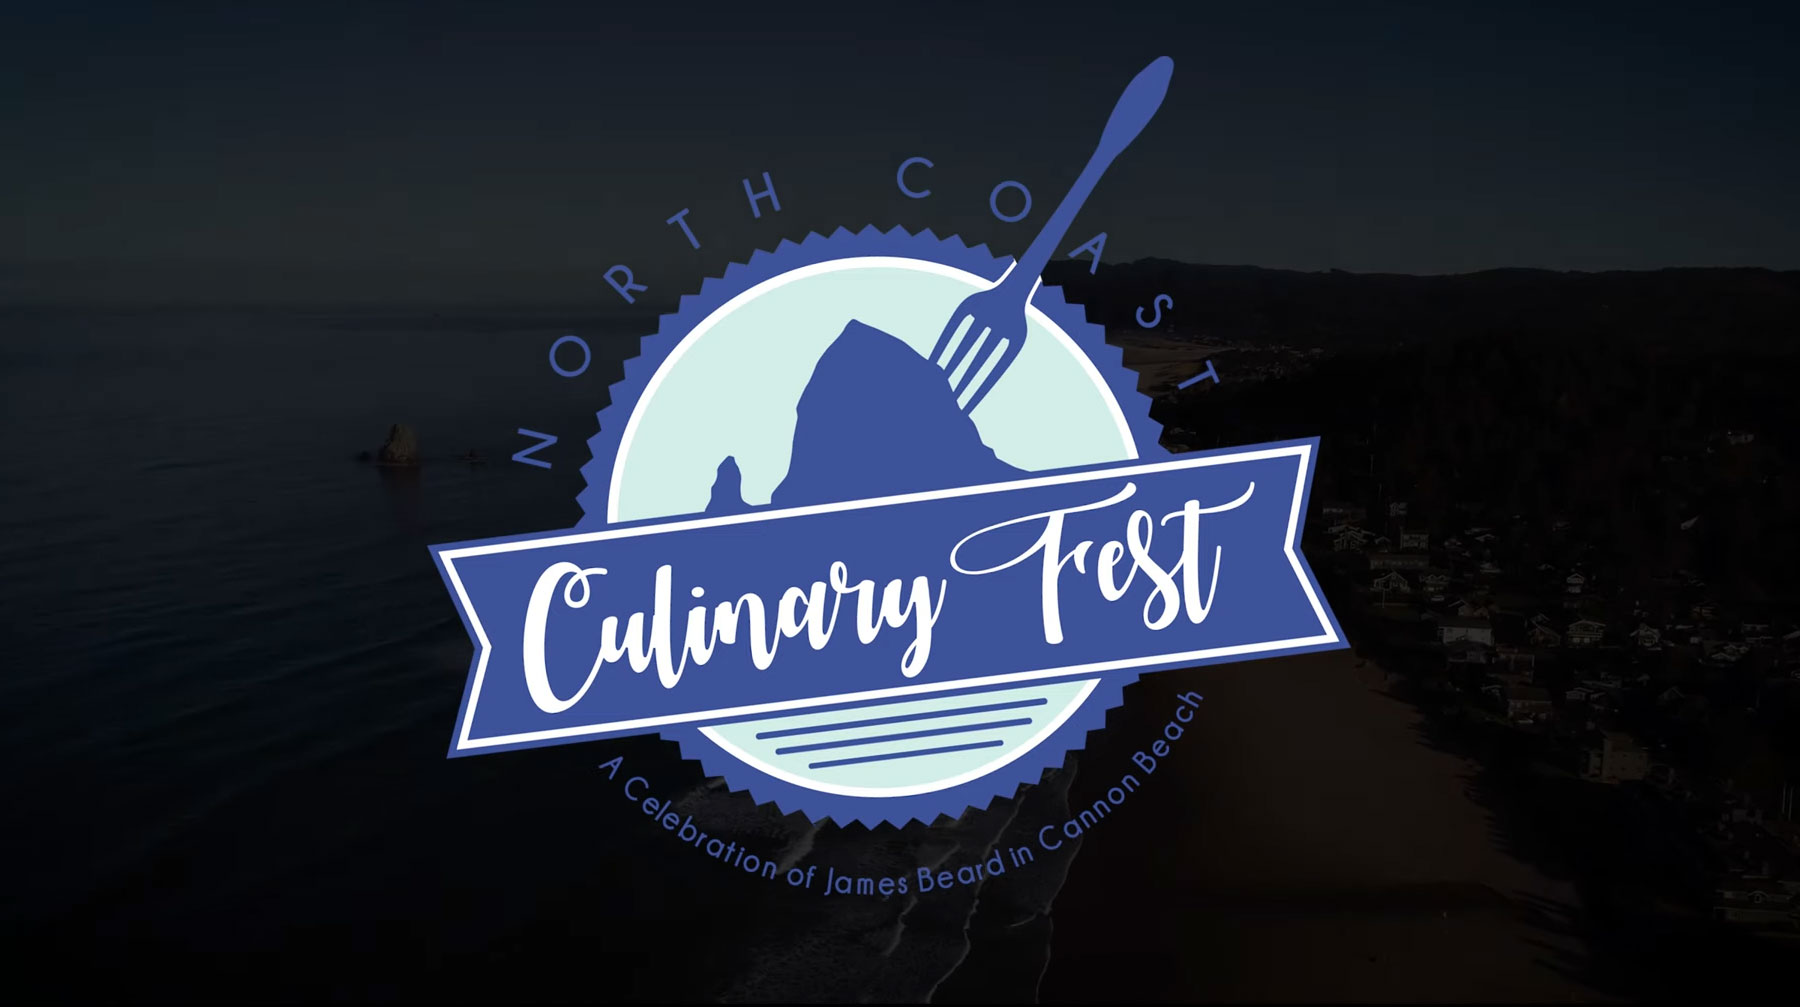 north coast culinary fest